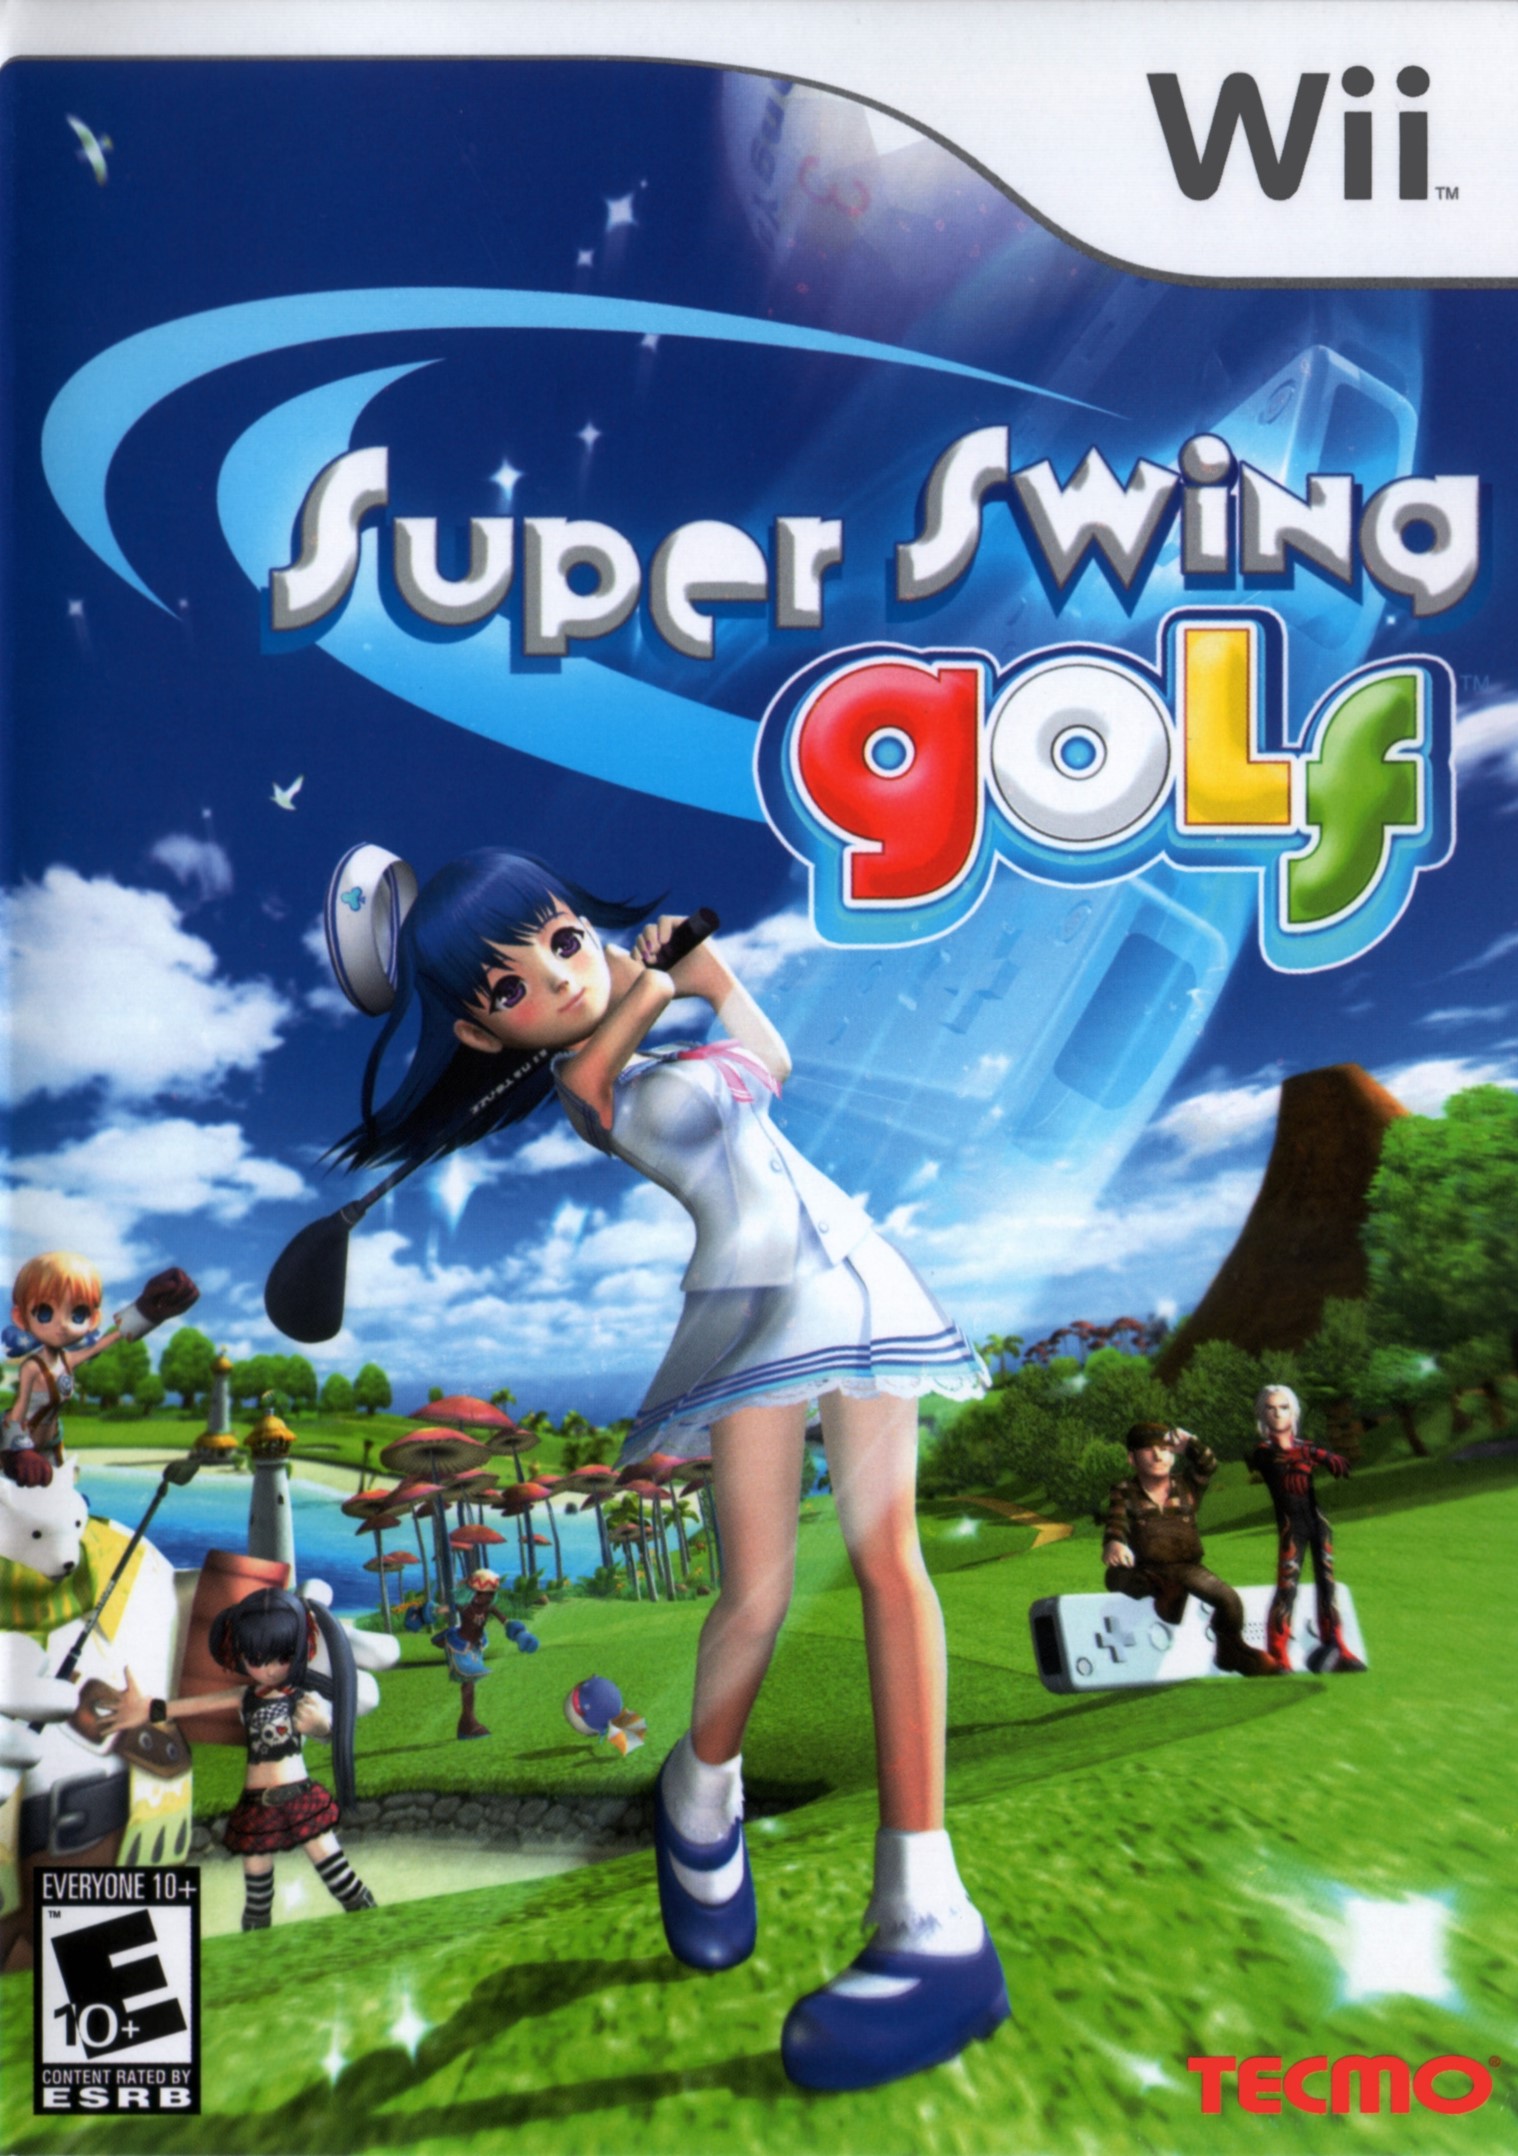 'Super Swing Golf'